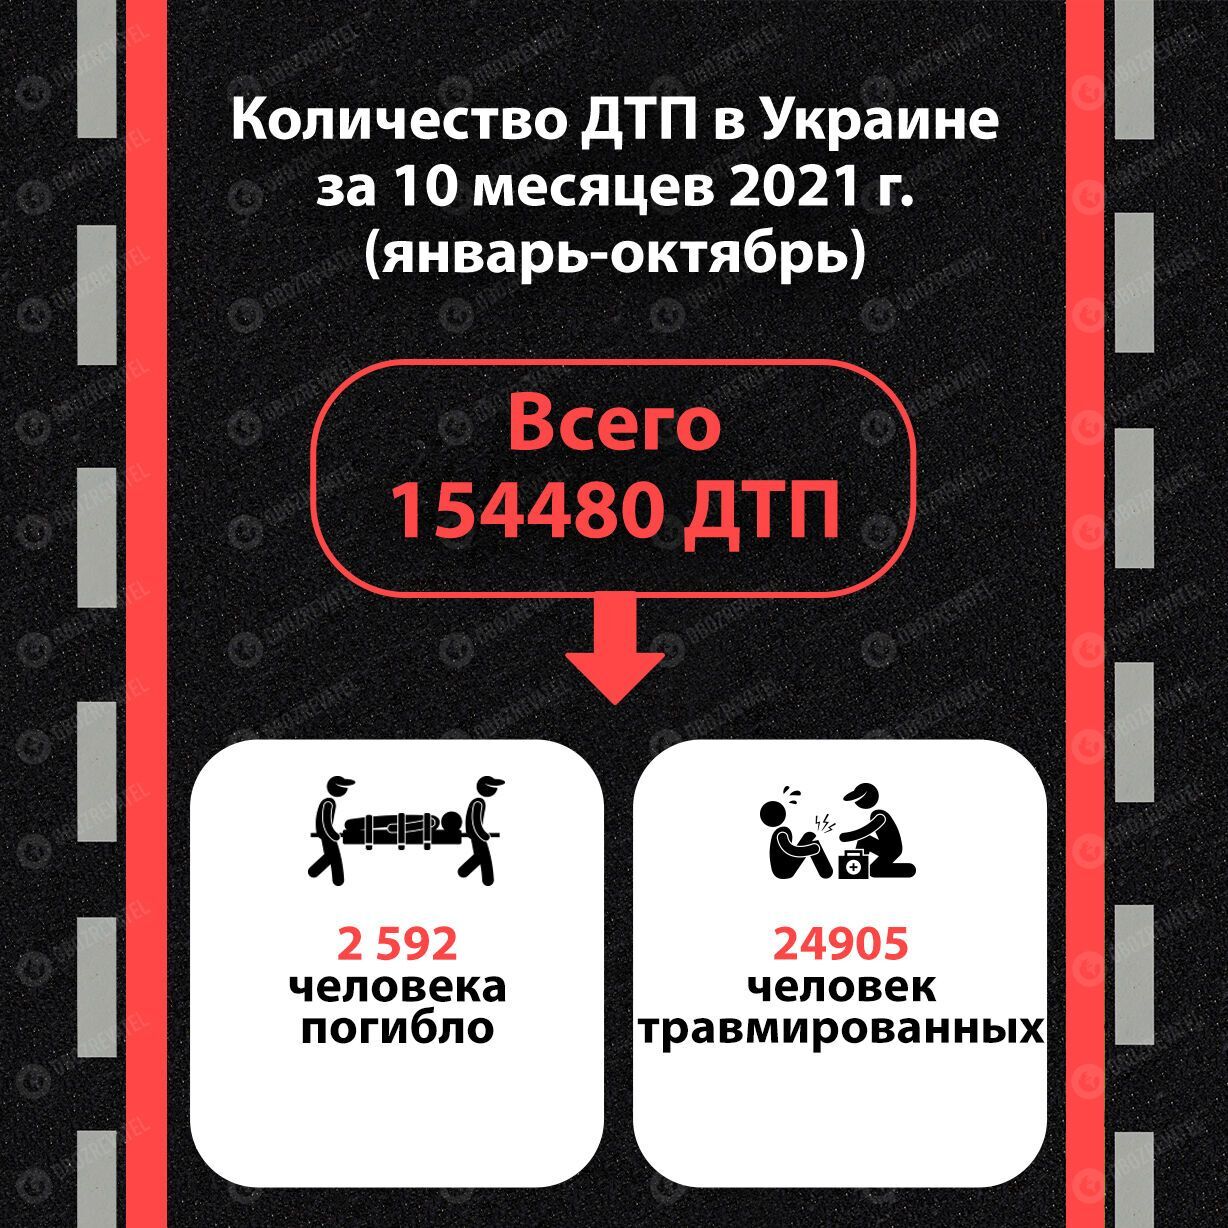 Статистика по ДТП в Украине за 10 месяцев